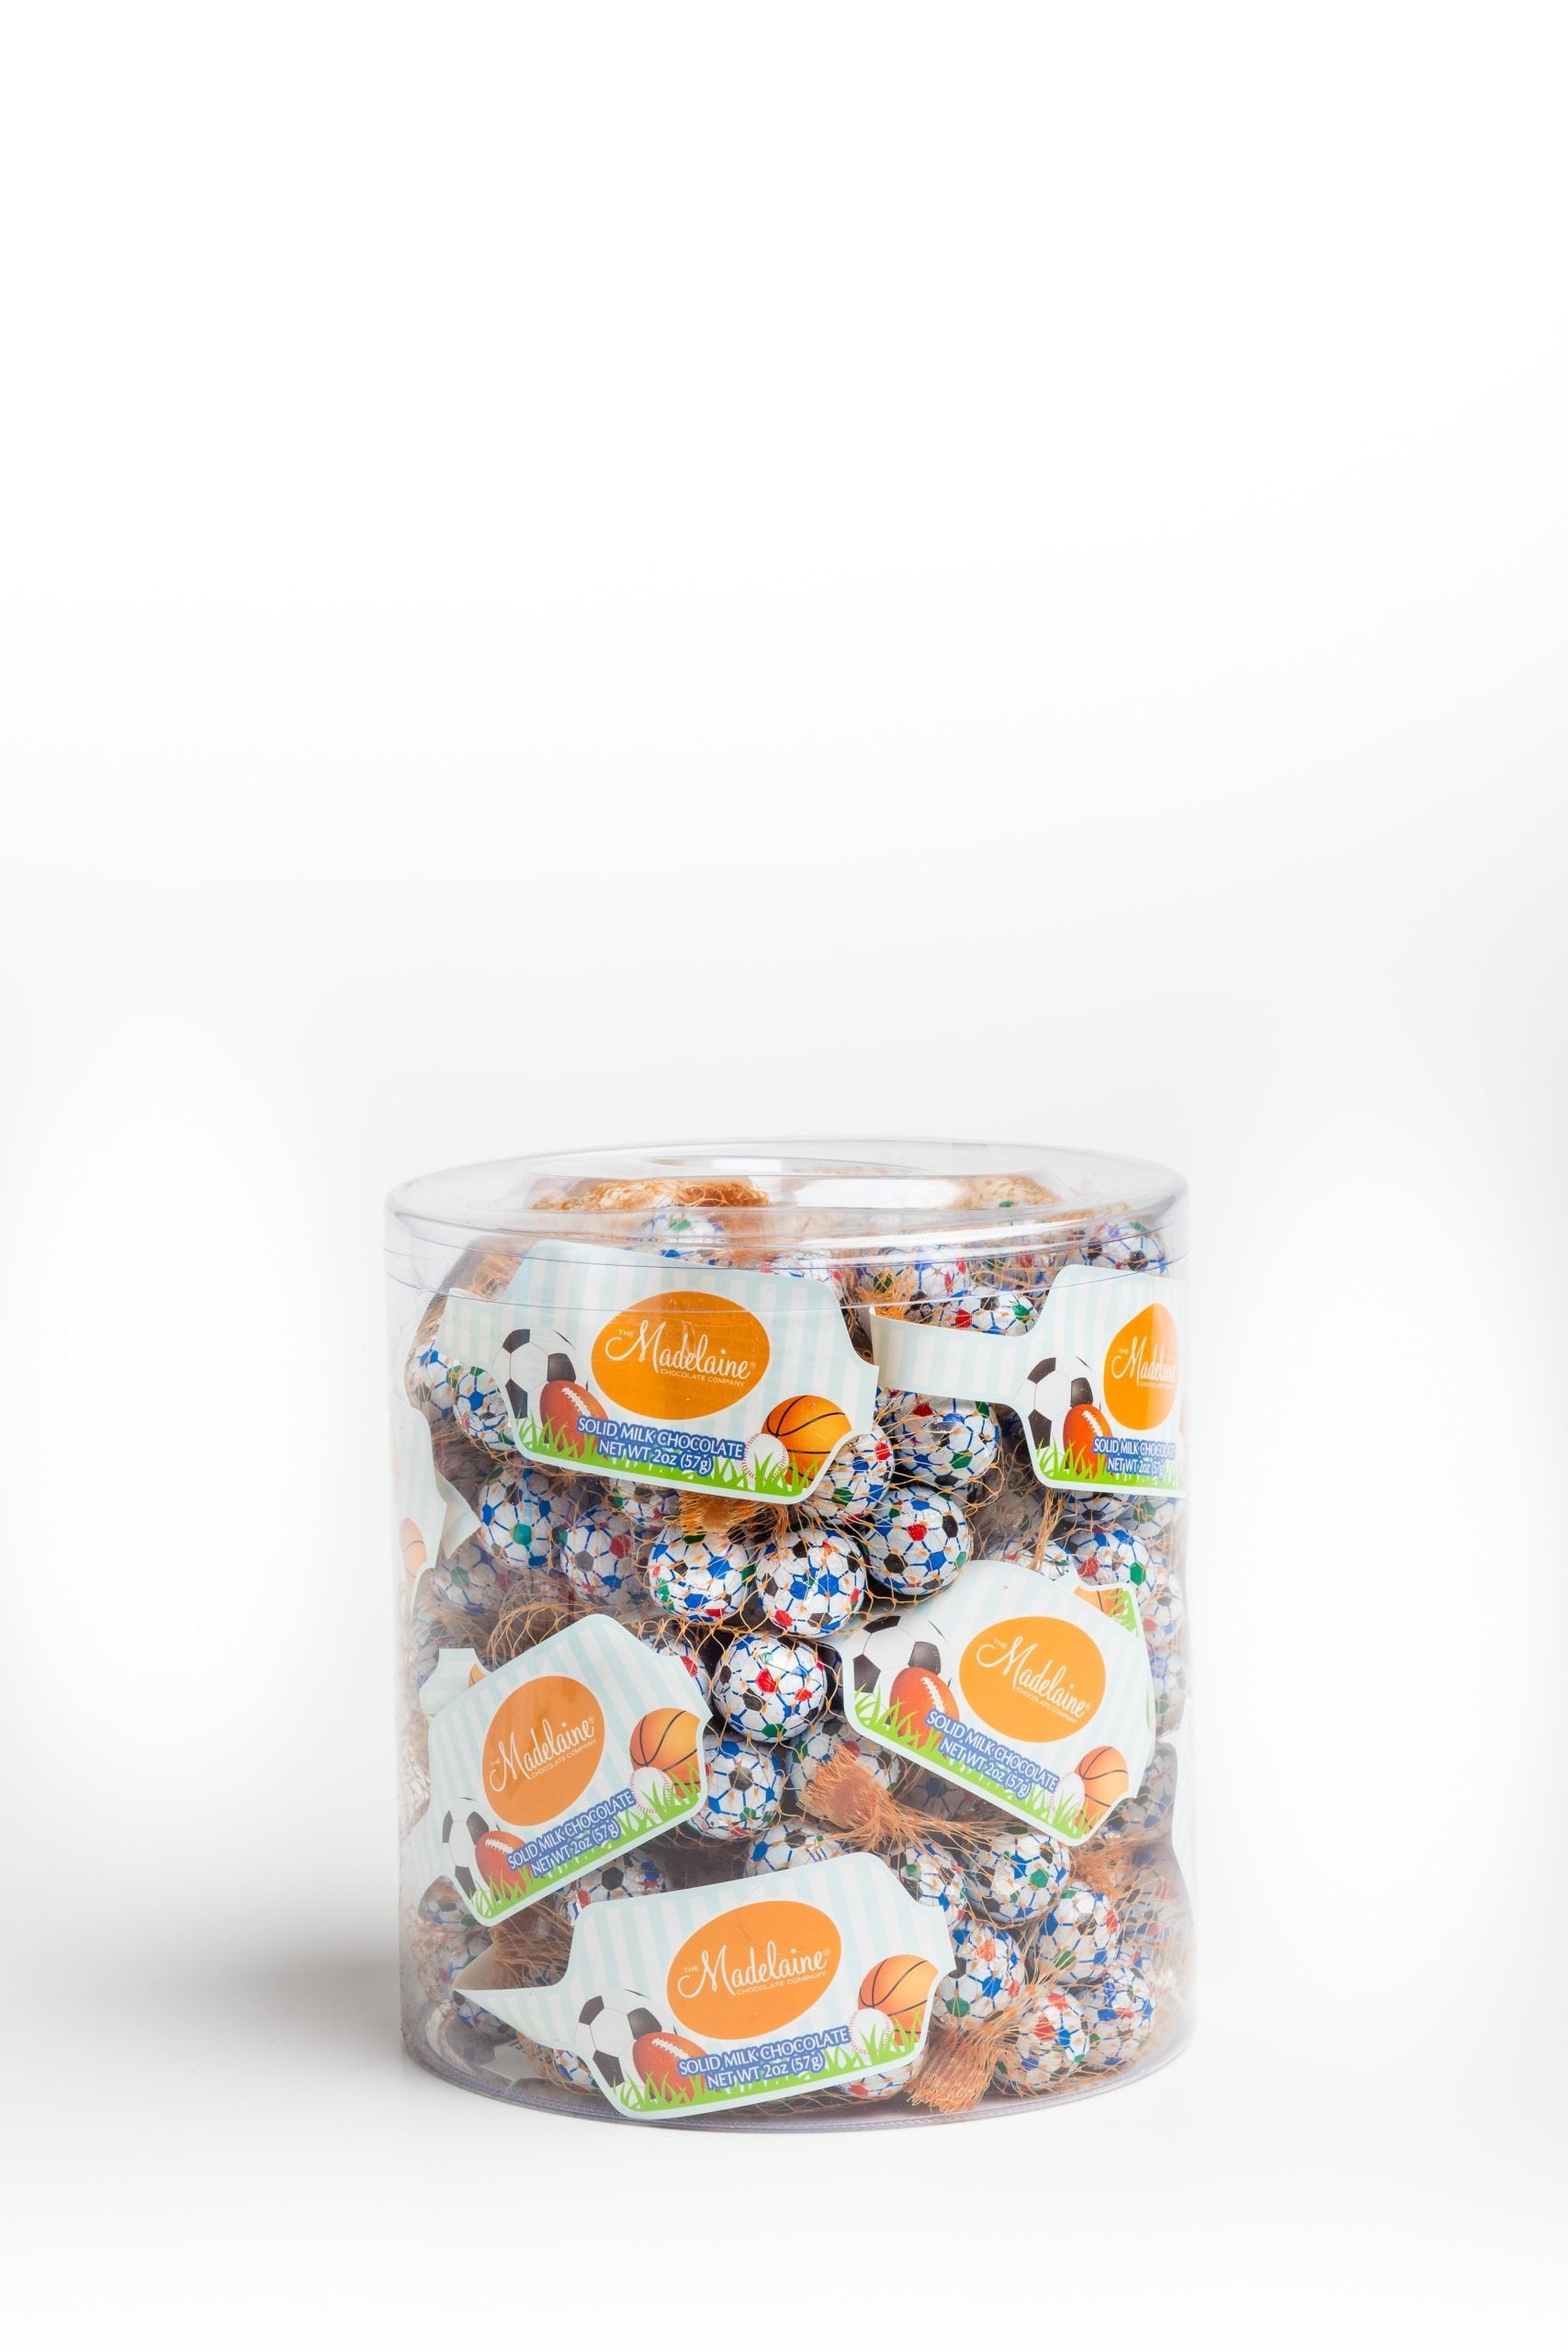 Wholesale Madelaine Chocolate 2 Oz. Soccer Ball Mesh Bag - 72 Ct Tub Bulk